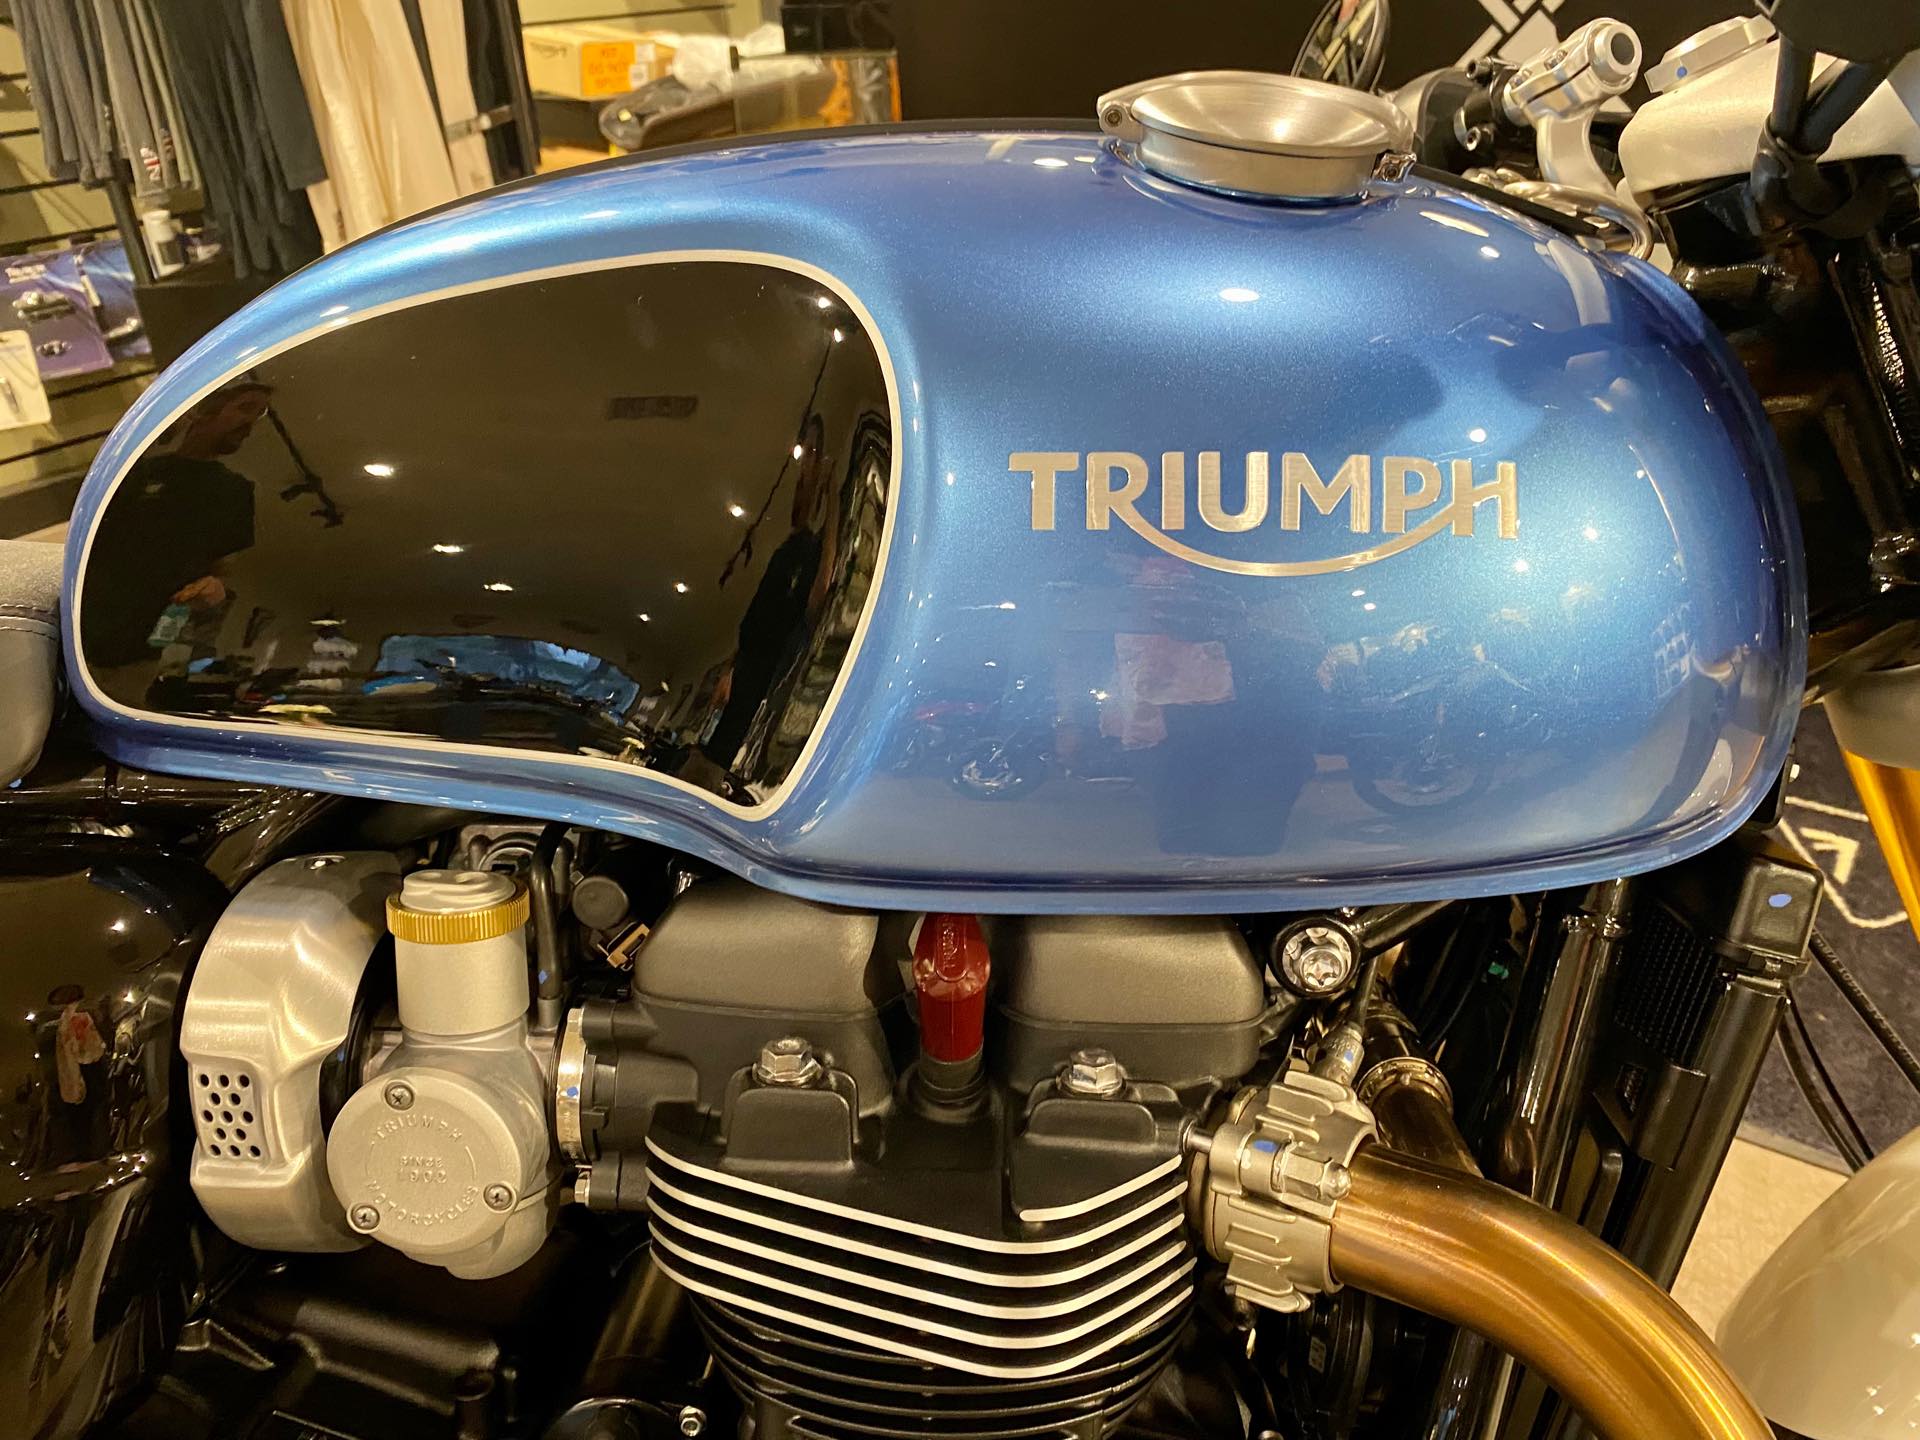 2022 Triumph Thruxton RS at Tampa Triumph, Tampa, FL 33614